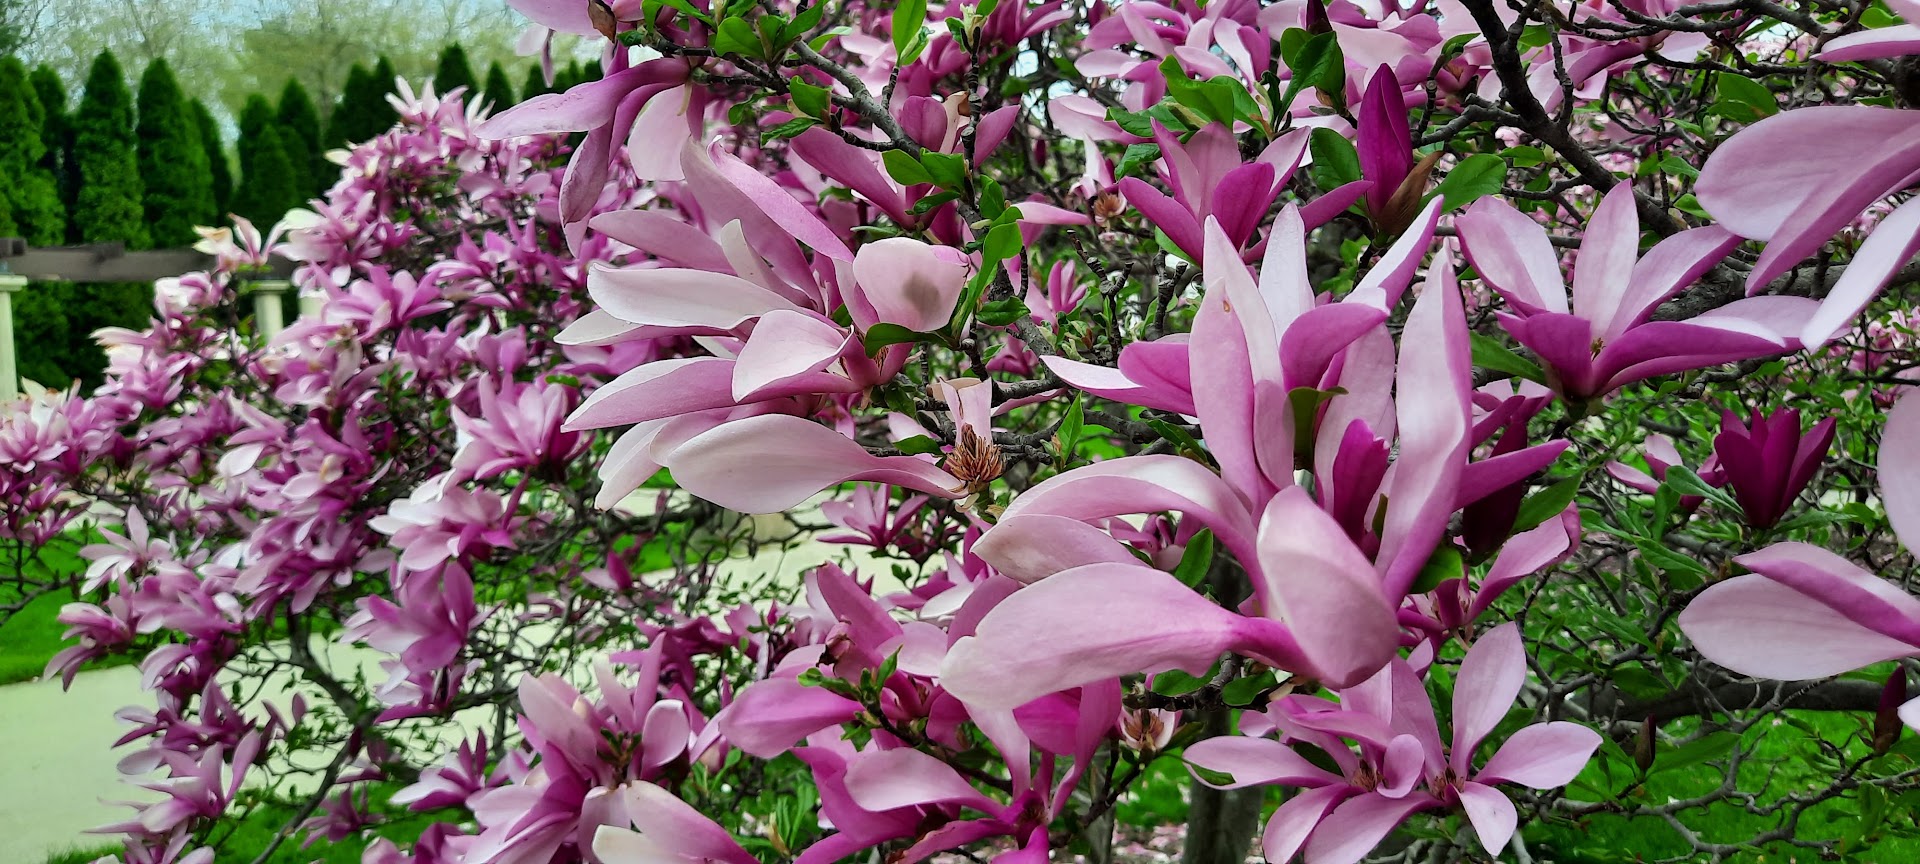 Closeup of saucer magnolia flowers.